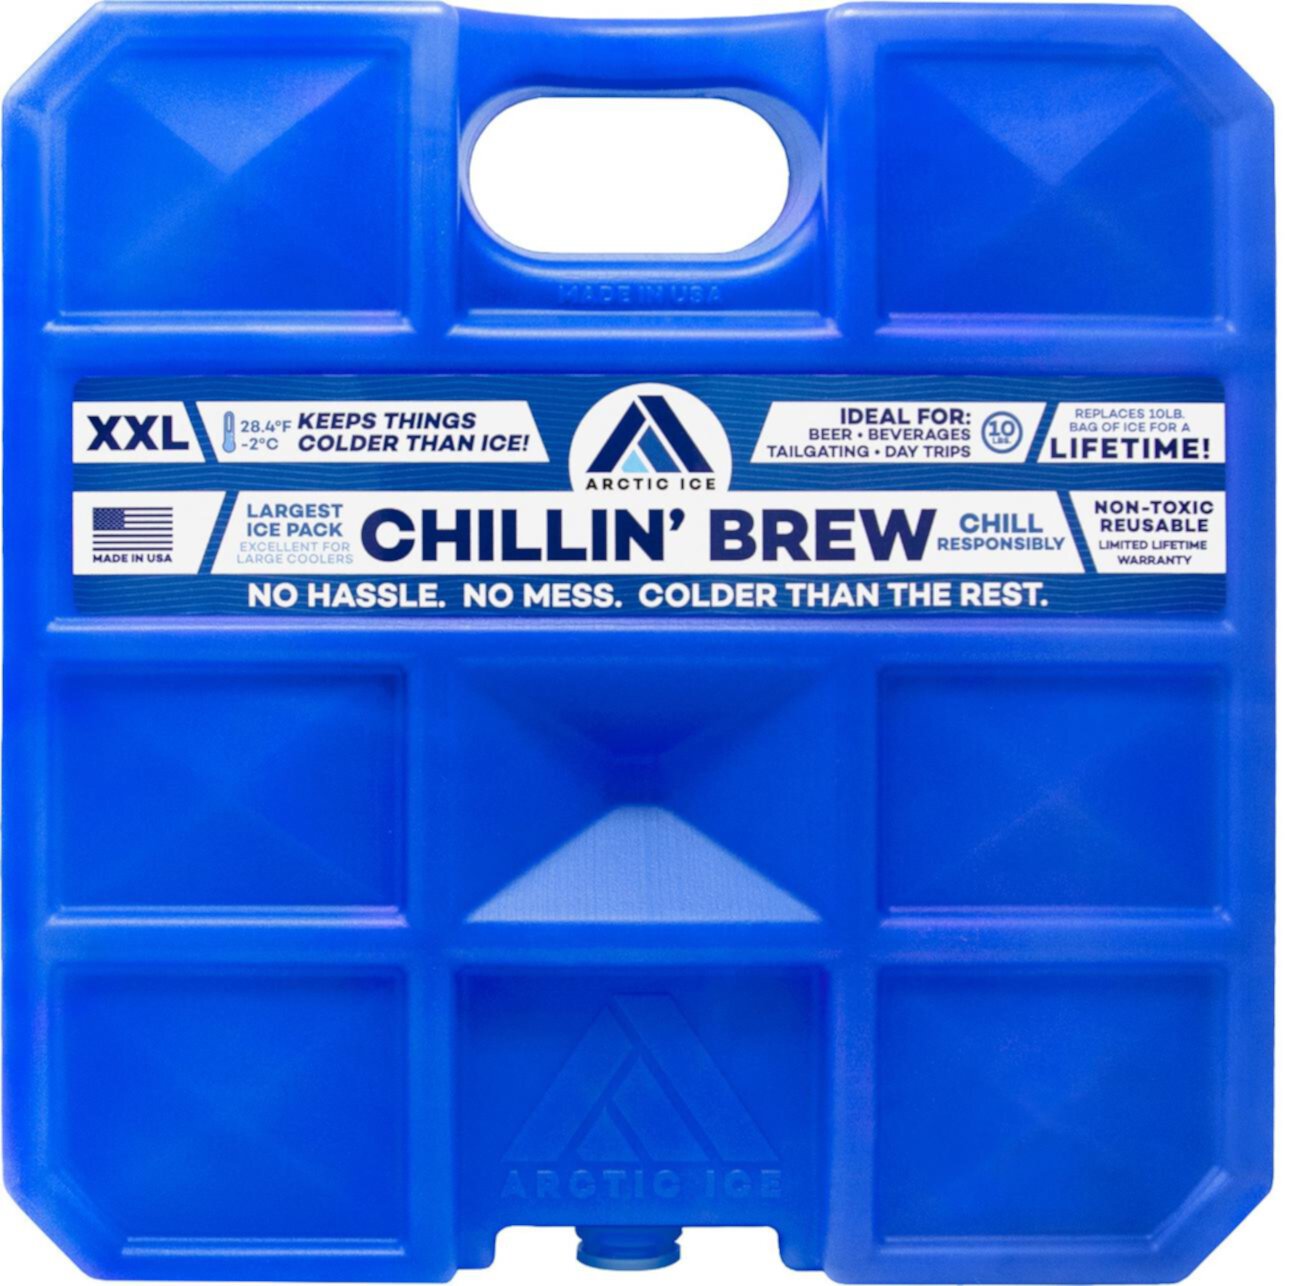 Chillin' Brew Ice Pack - 10 lbs. Arctic Ice